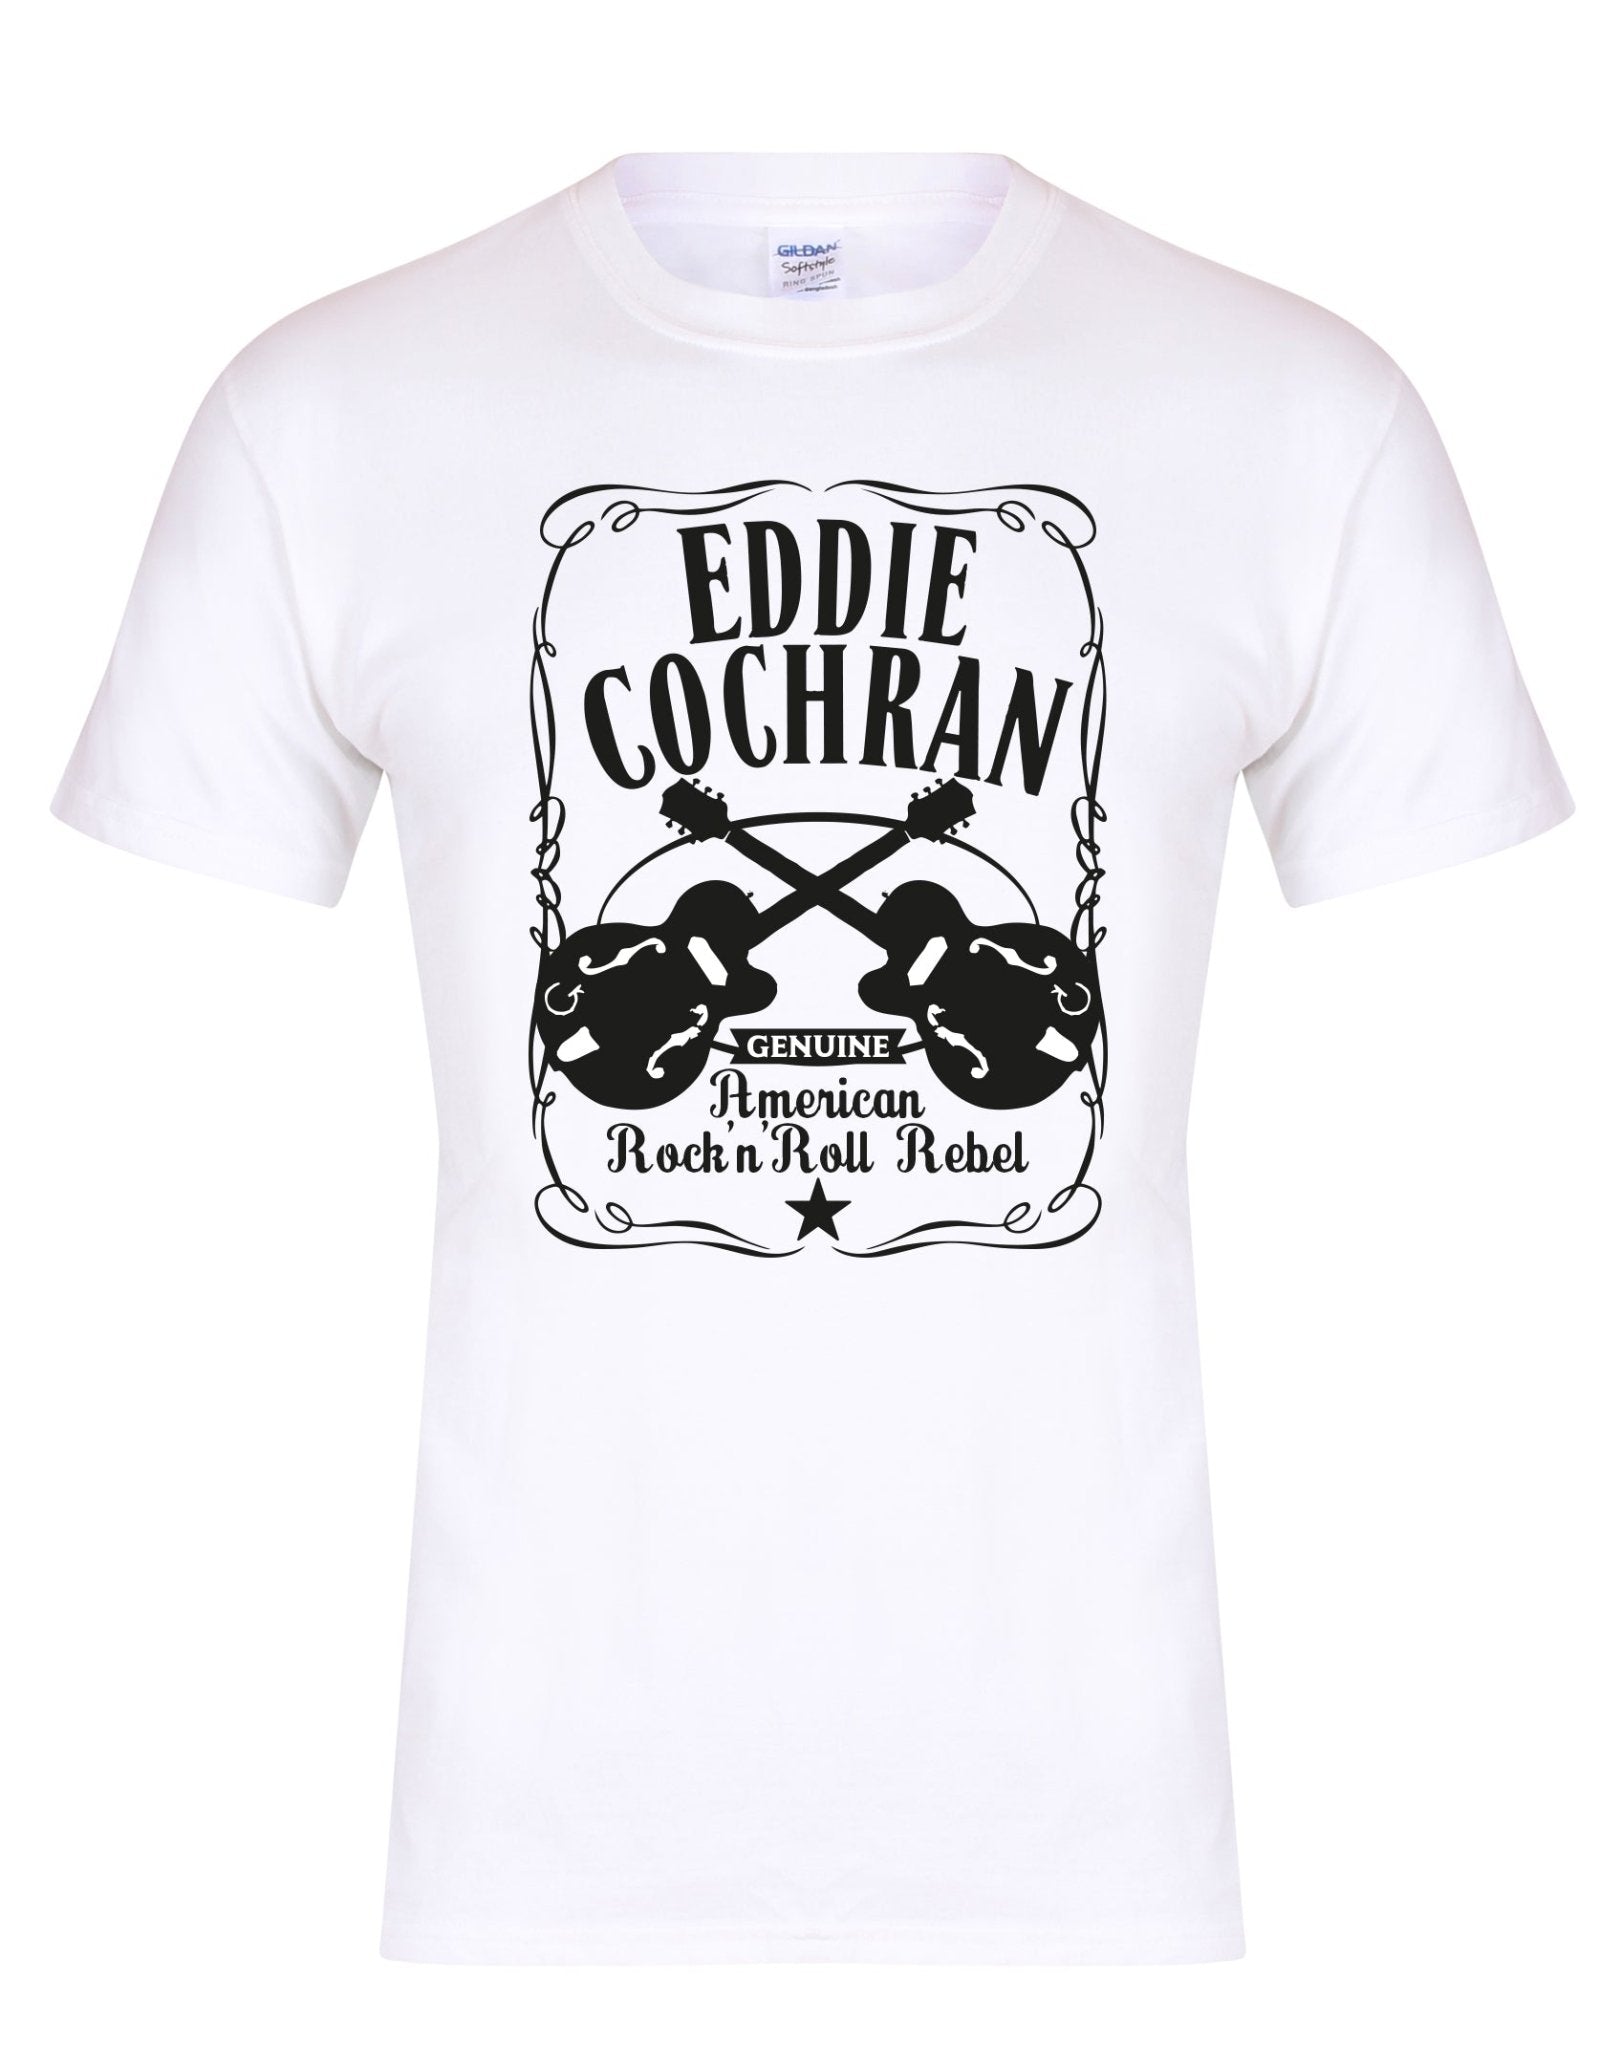 Eddie Cochran - Cross Gretsch guitars unisex fit T-shirt - various colours - Dirty Stop Outs